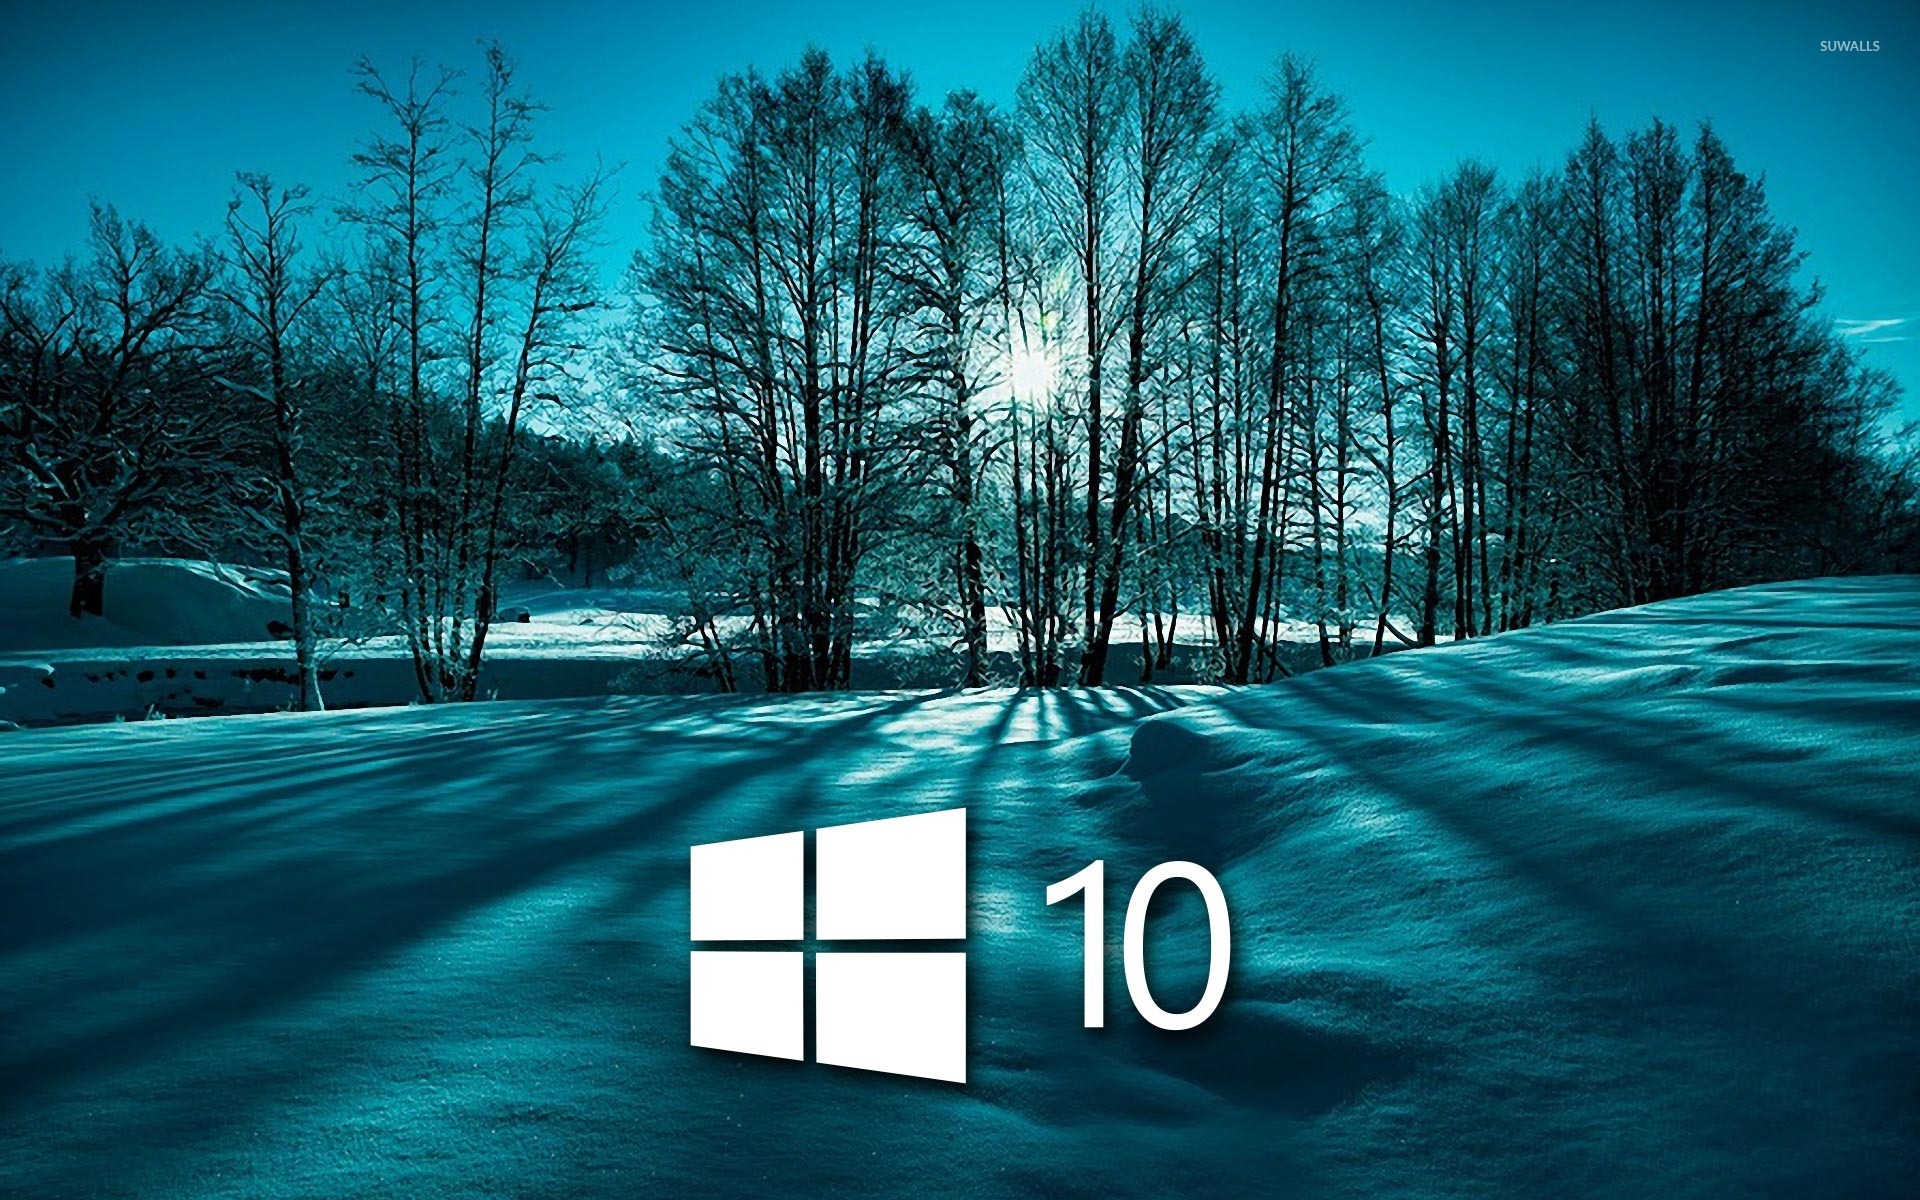 Windows 10 on snowy trees simple white logo wallpaper - Computer